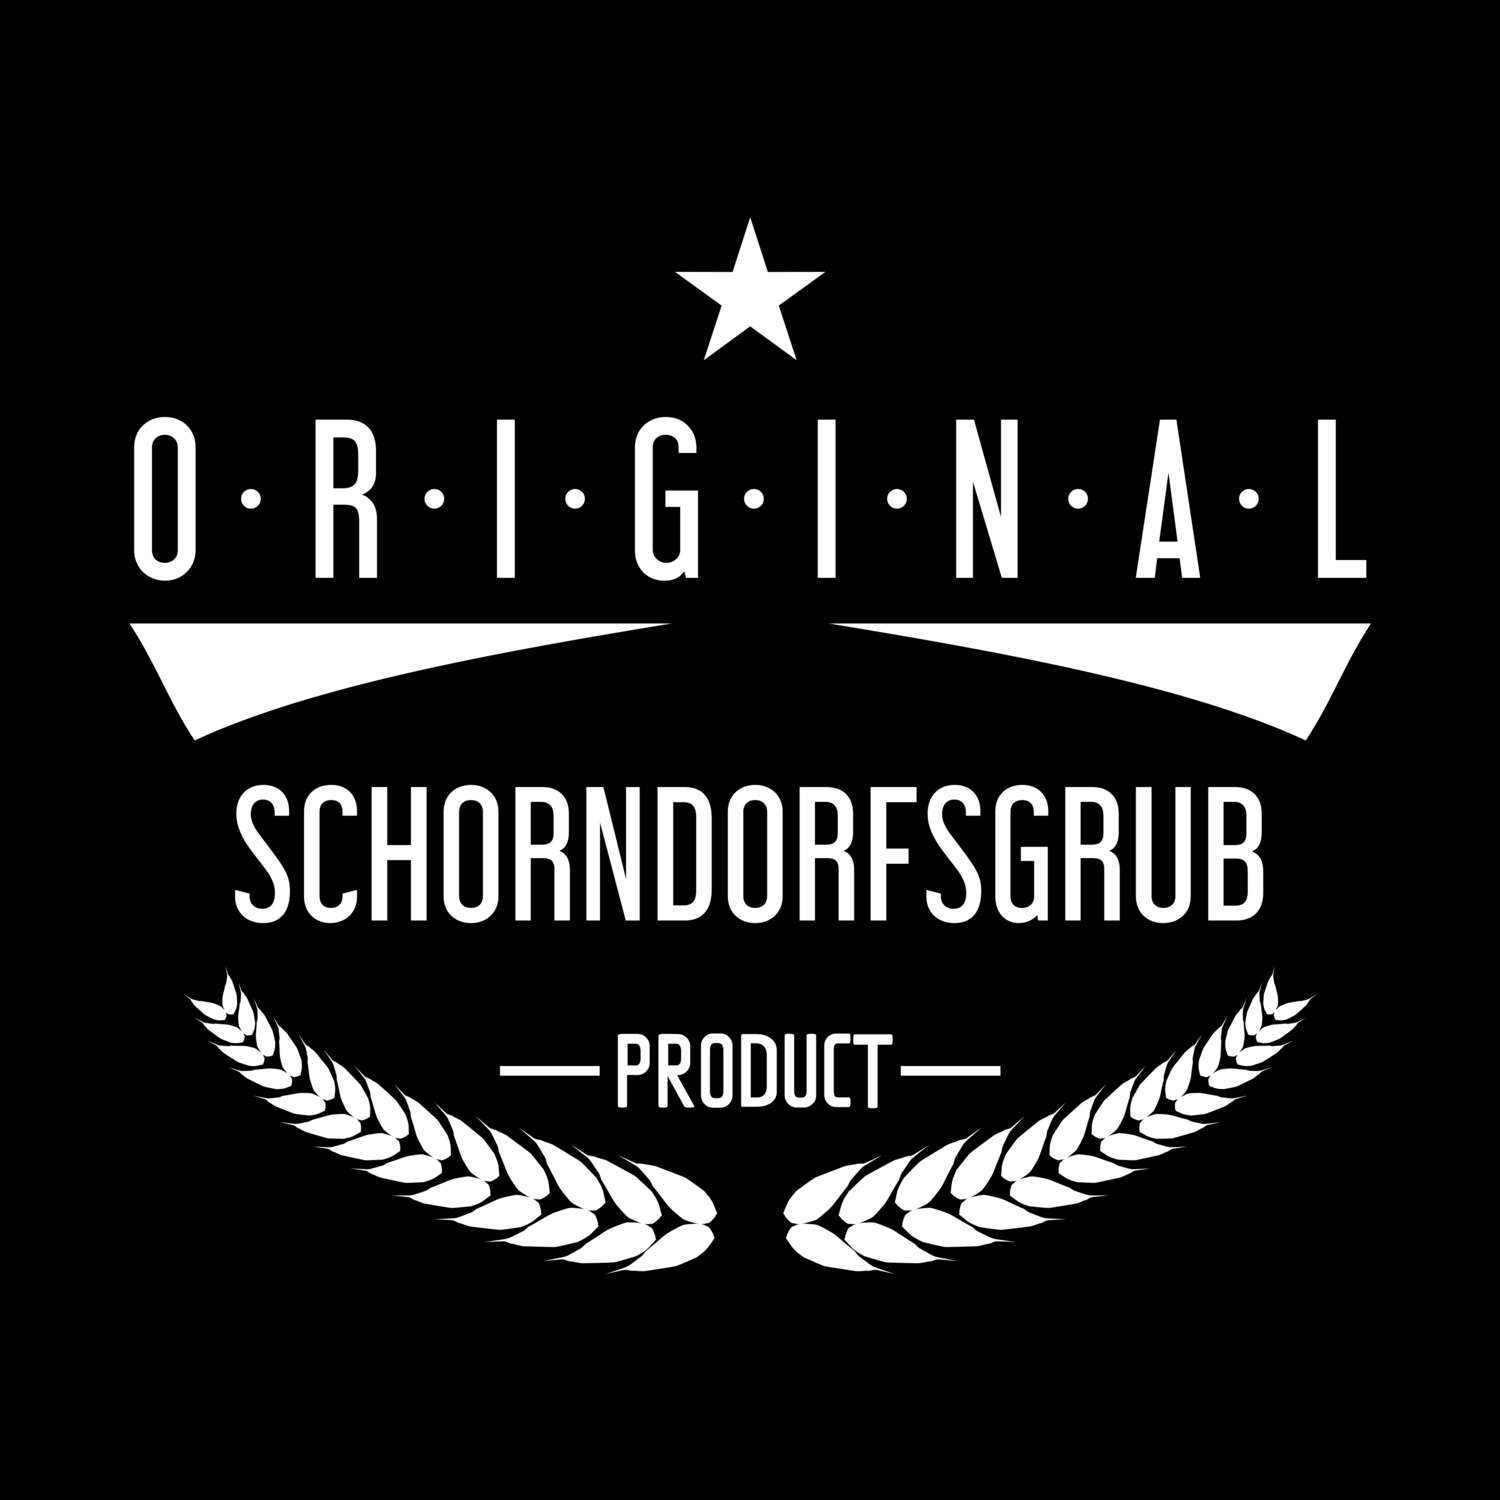 Schorndorfsgrub T-Shirt »Original Product«